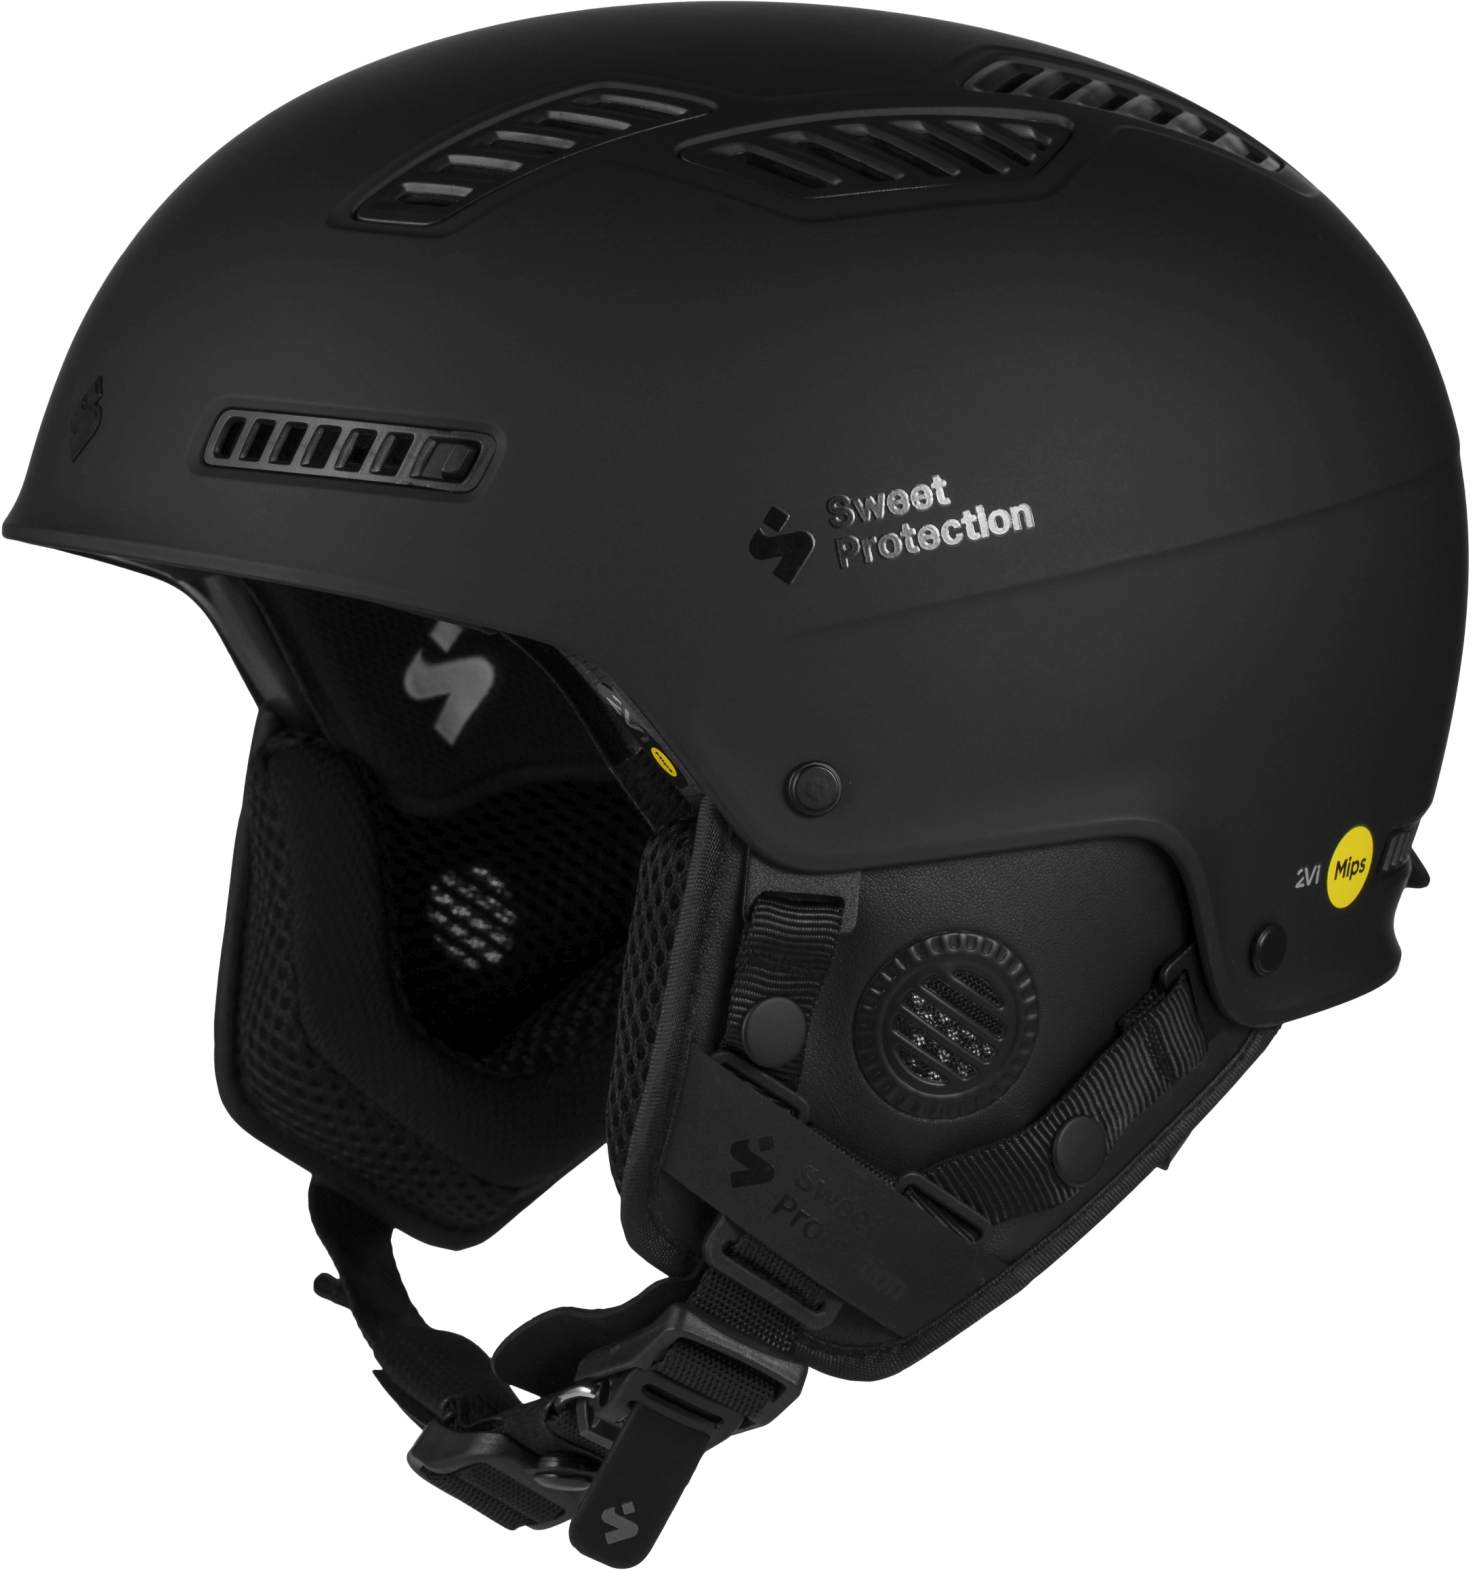 E-shop Sweet Protection Igniter 2Vi MIPS Helmet - Dirt Black 56-59